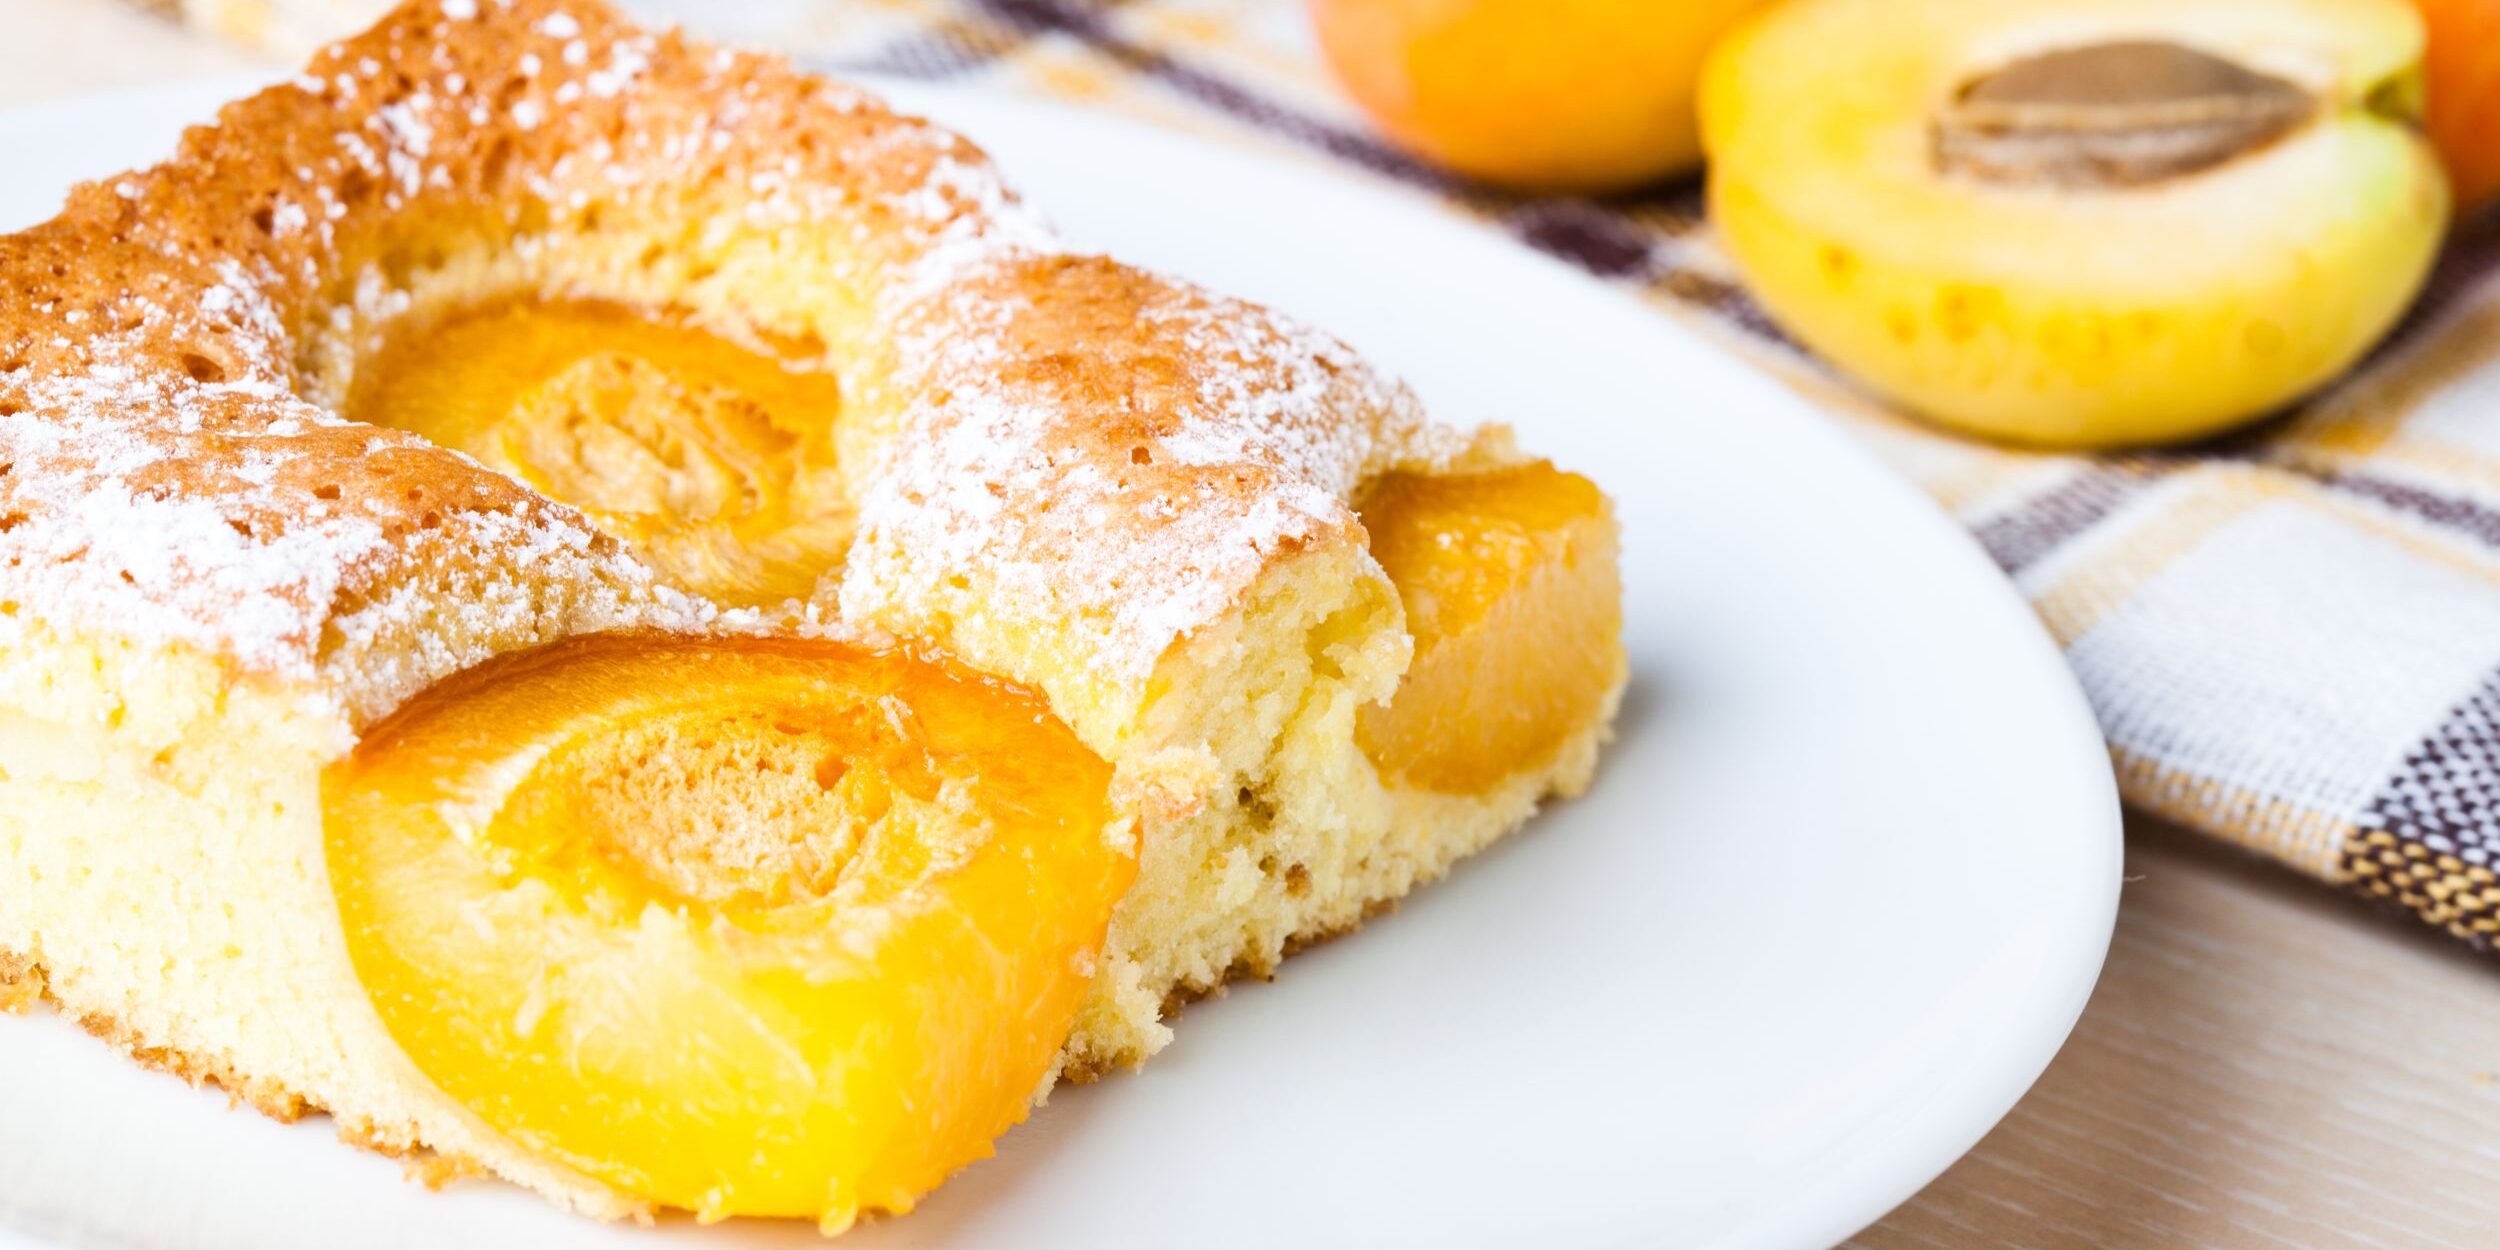 Австрийский пирог с абрикосами: рецепт